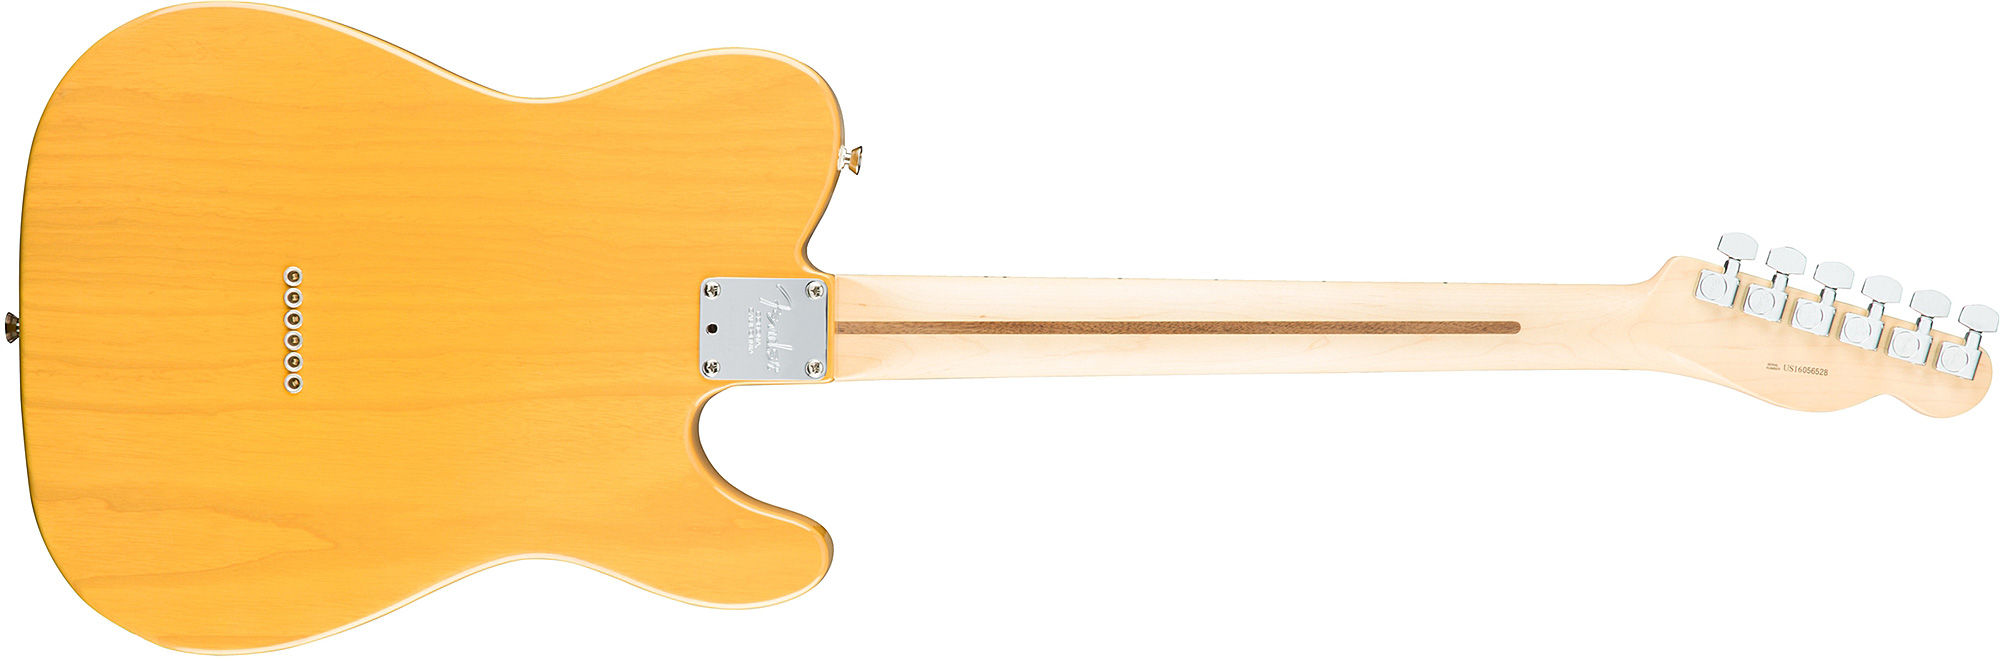 Fender Tele American Professional Lh Usa Gaucher 2s Mn - Butterscotch Blonde - Guitare Électrique Gaucher - Variation 1